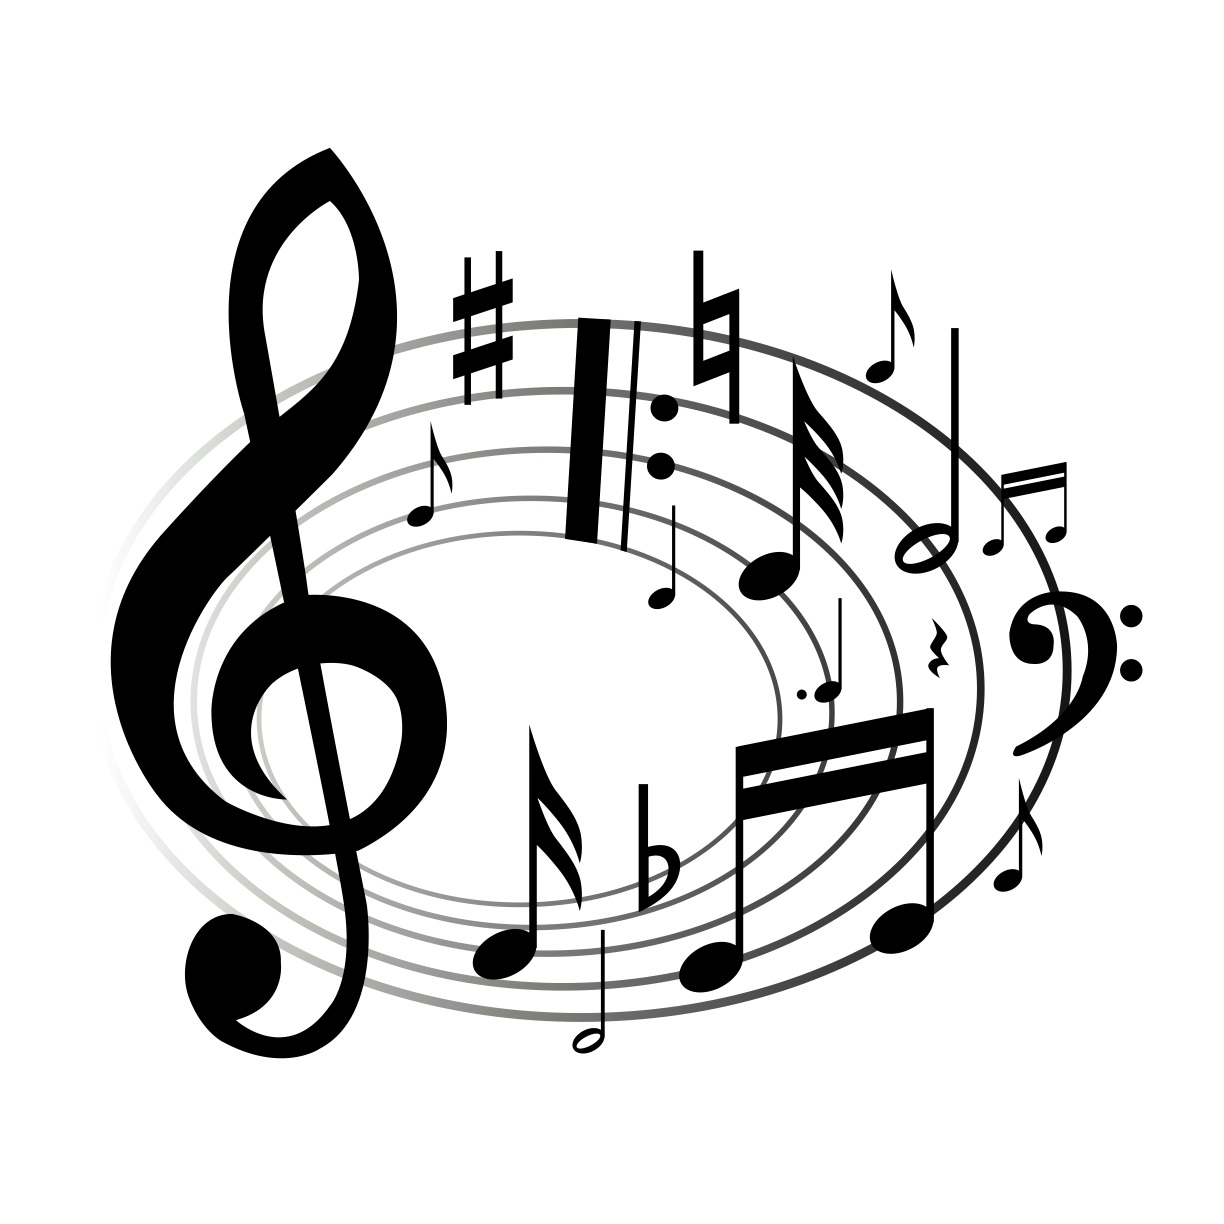 Music Notes Symbols Clip Art | Clipart Panda - Free Clipart Images